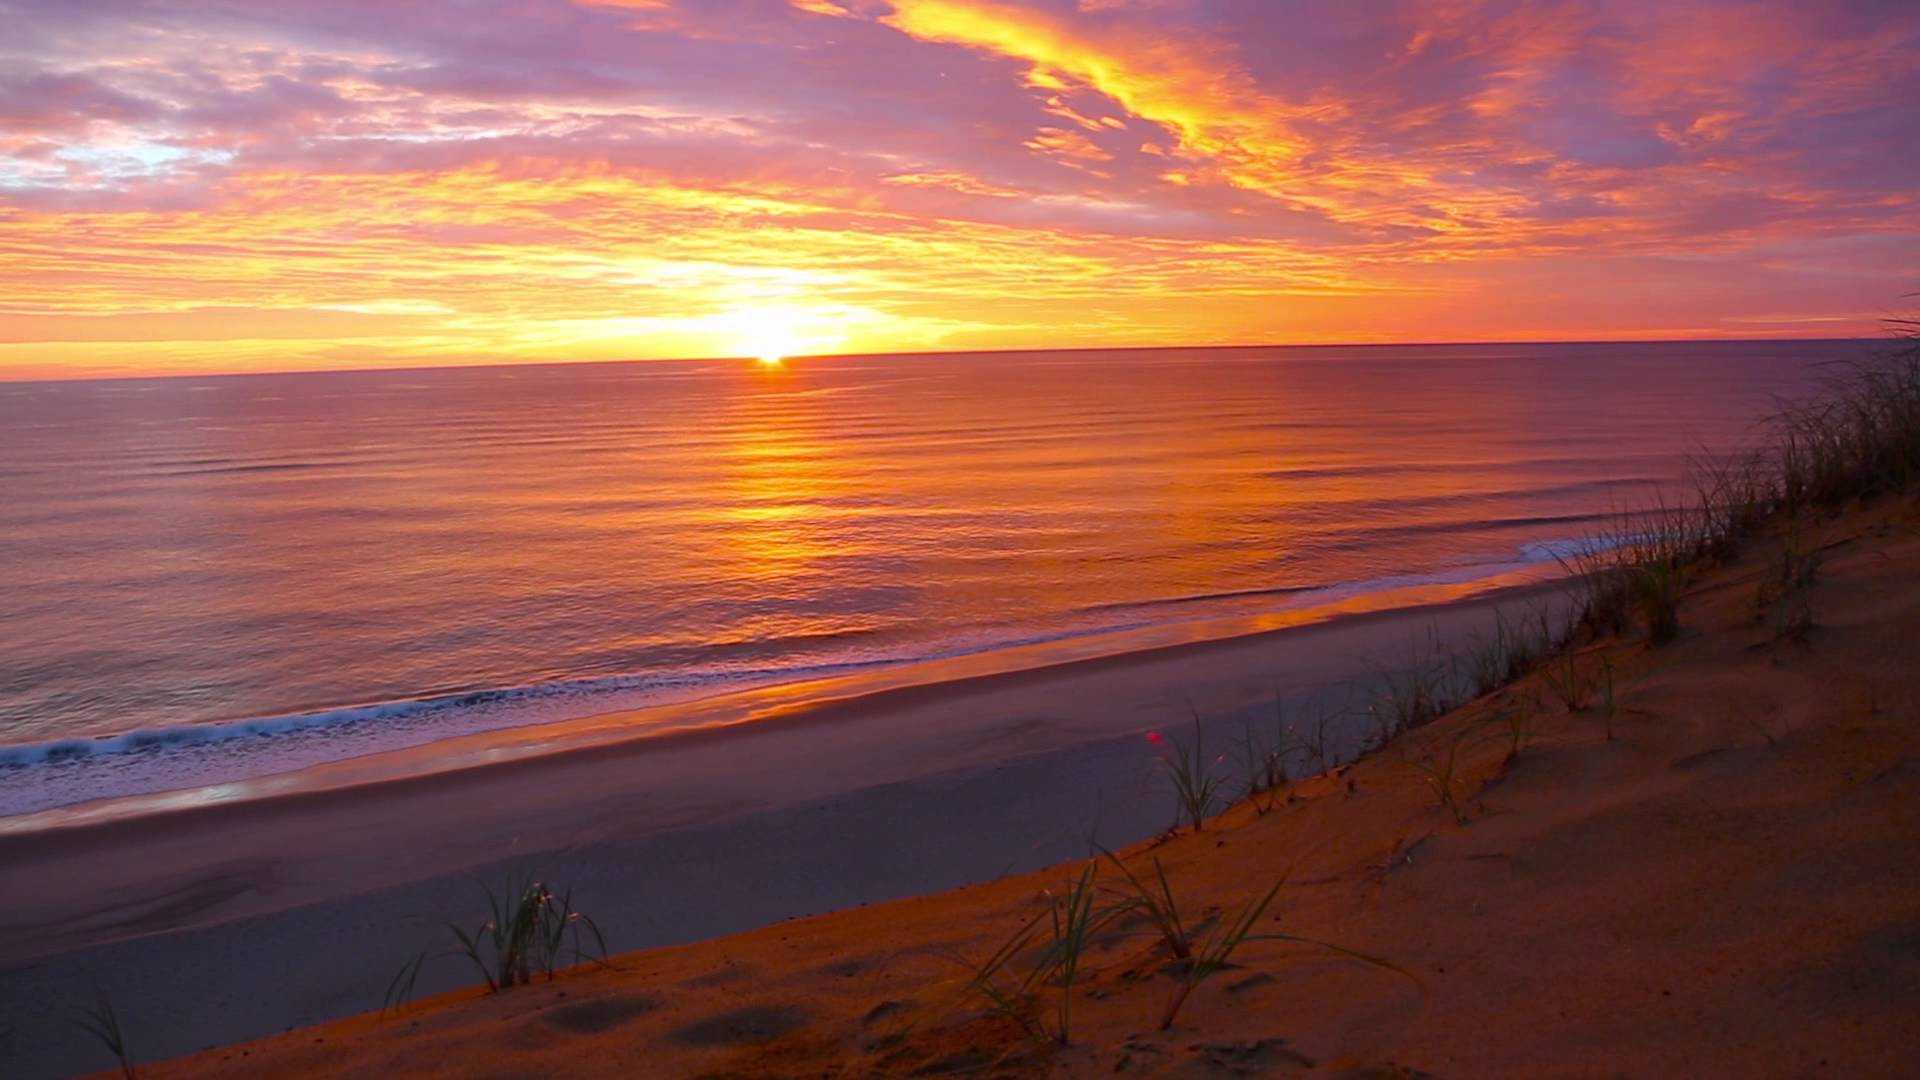 Cape Cod Beach Sunset Wallpapers - Top Free Cape Cod Beach Sunset